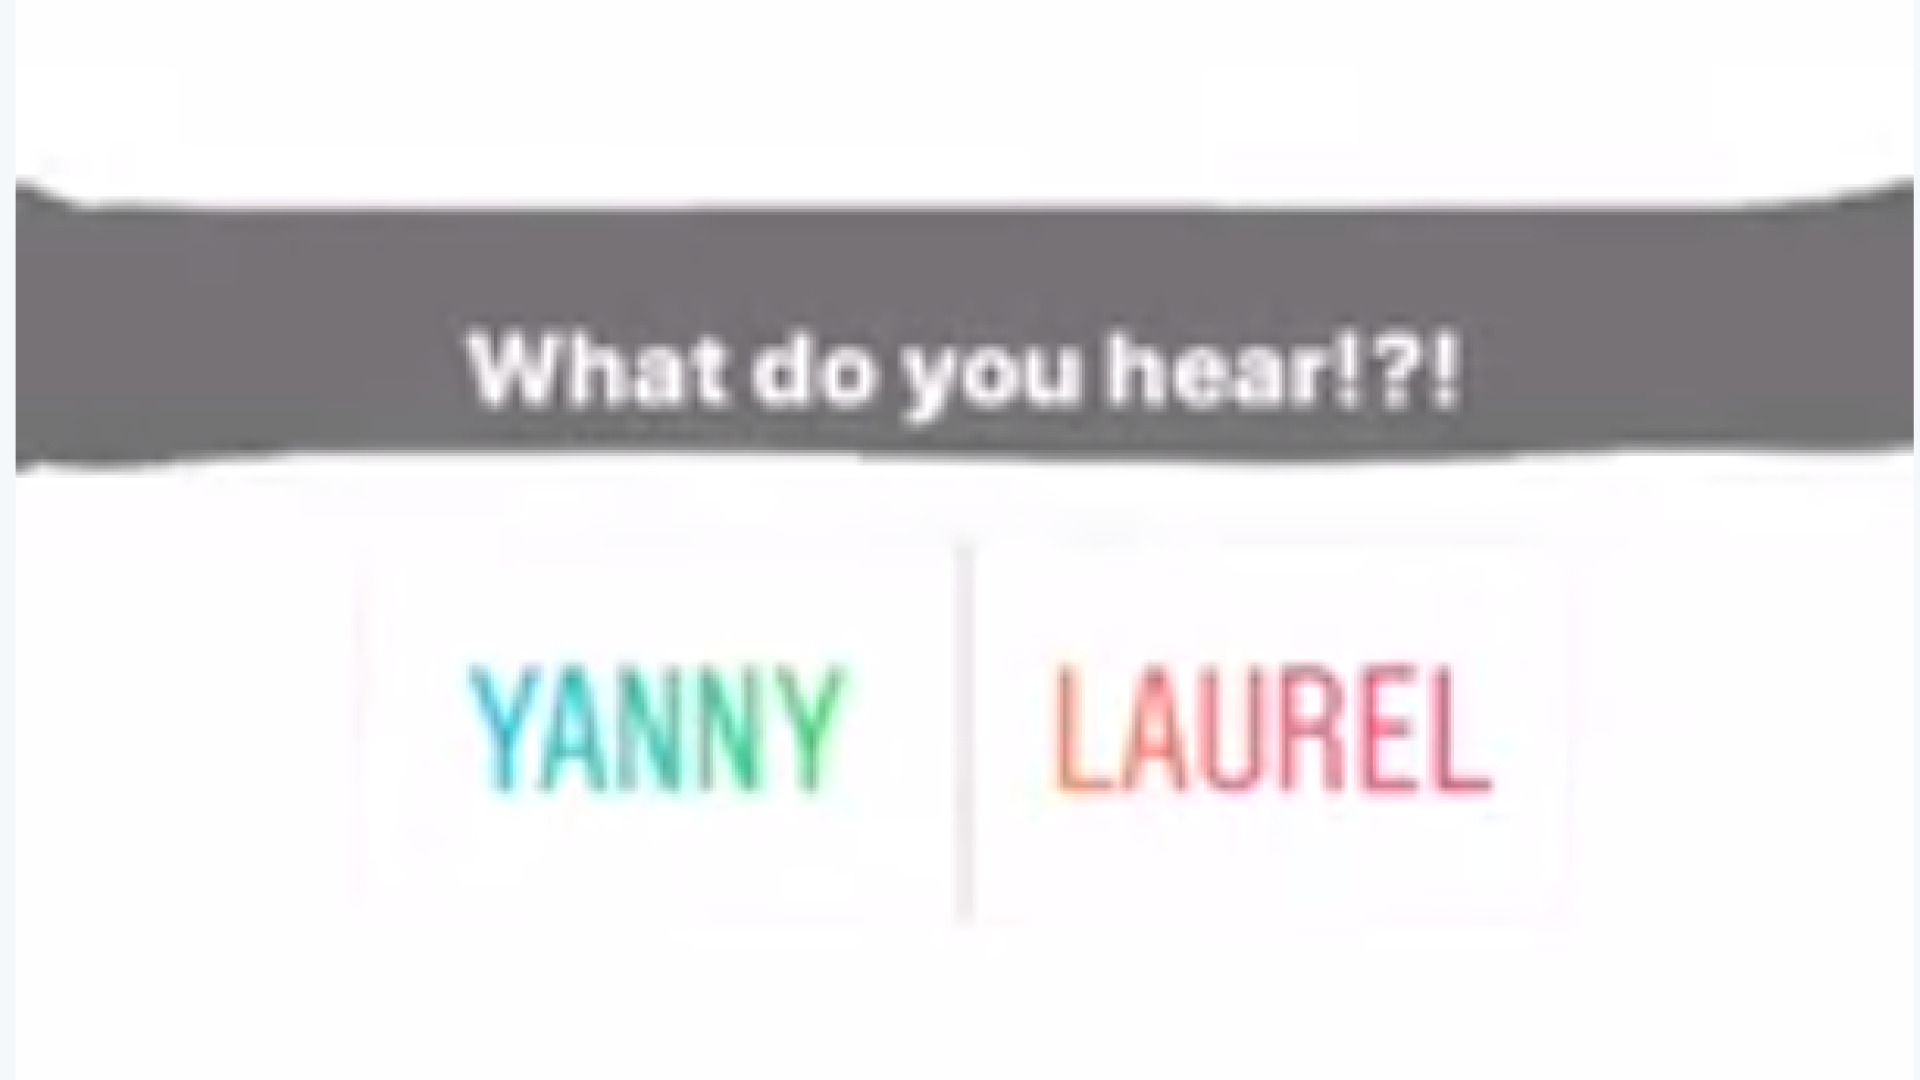 Yanny/Laurel